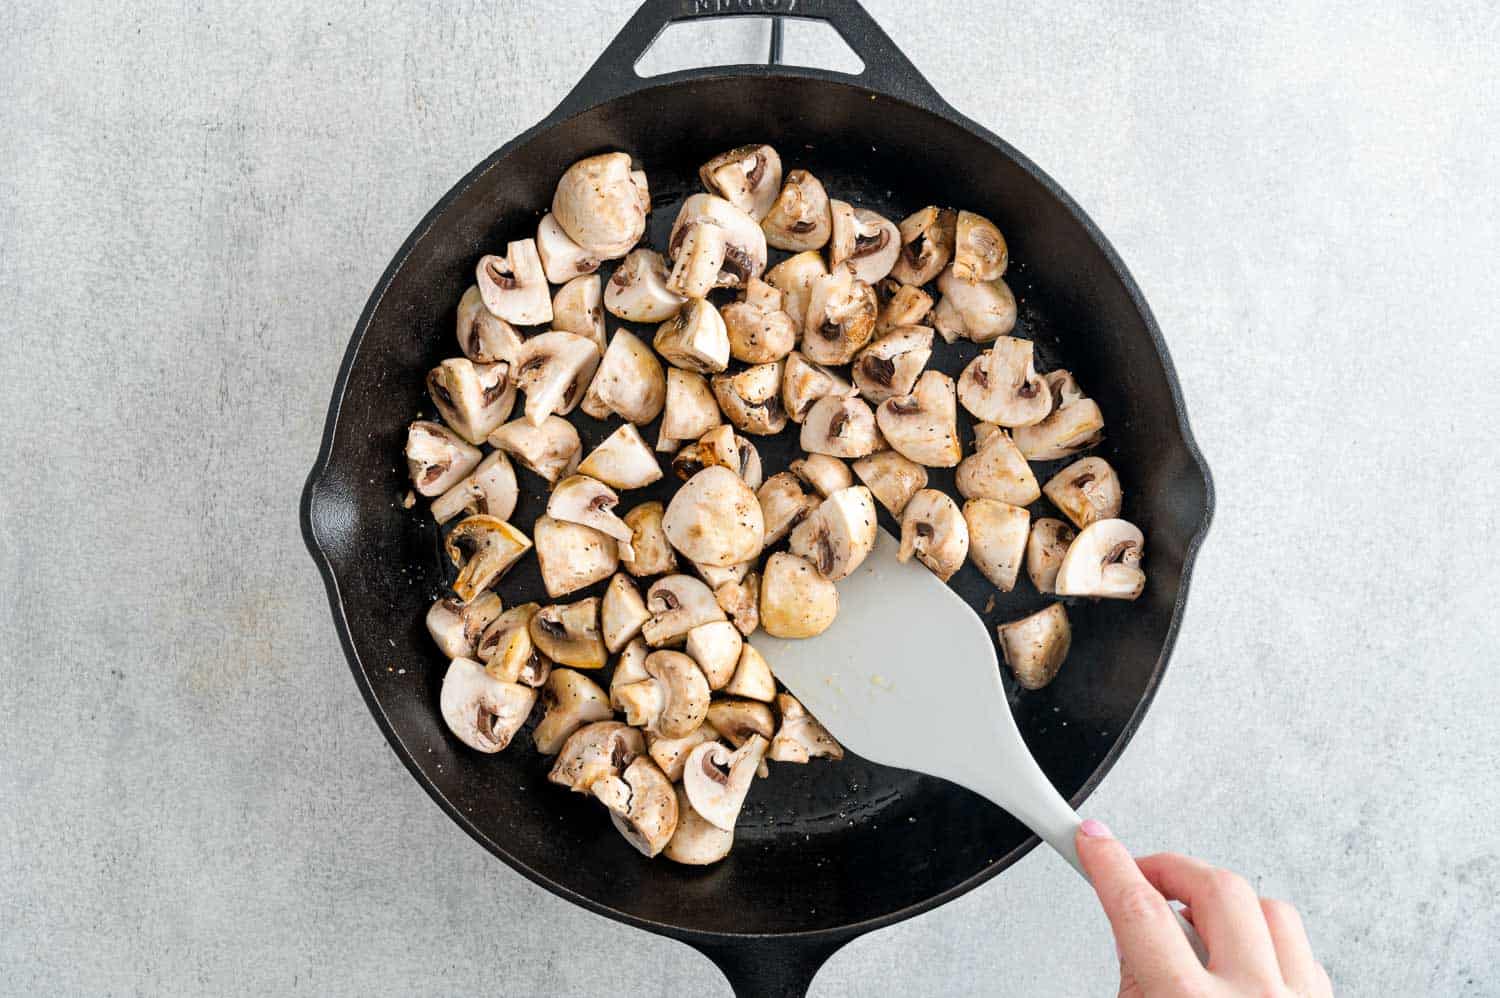 Uncooked mushrooms in a black pan.